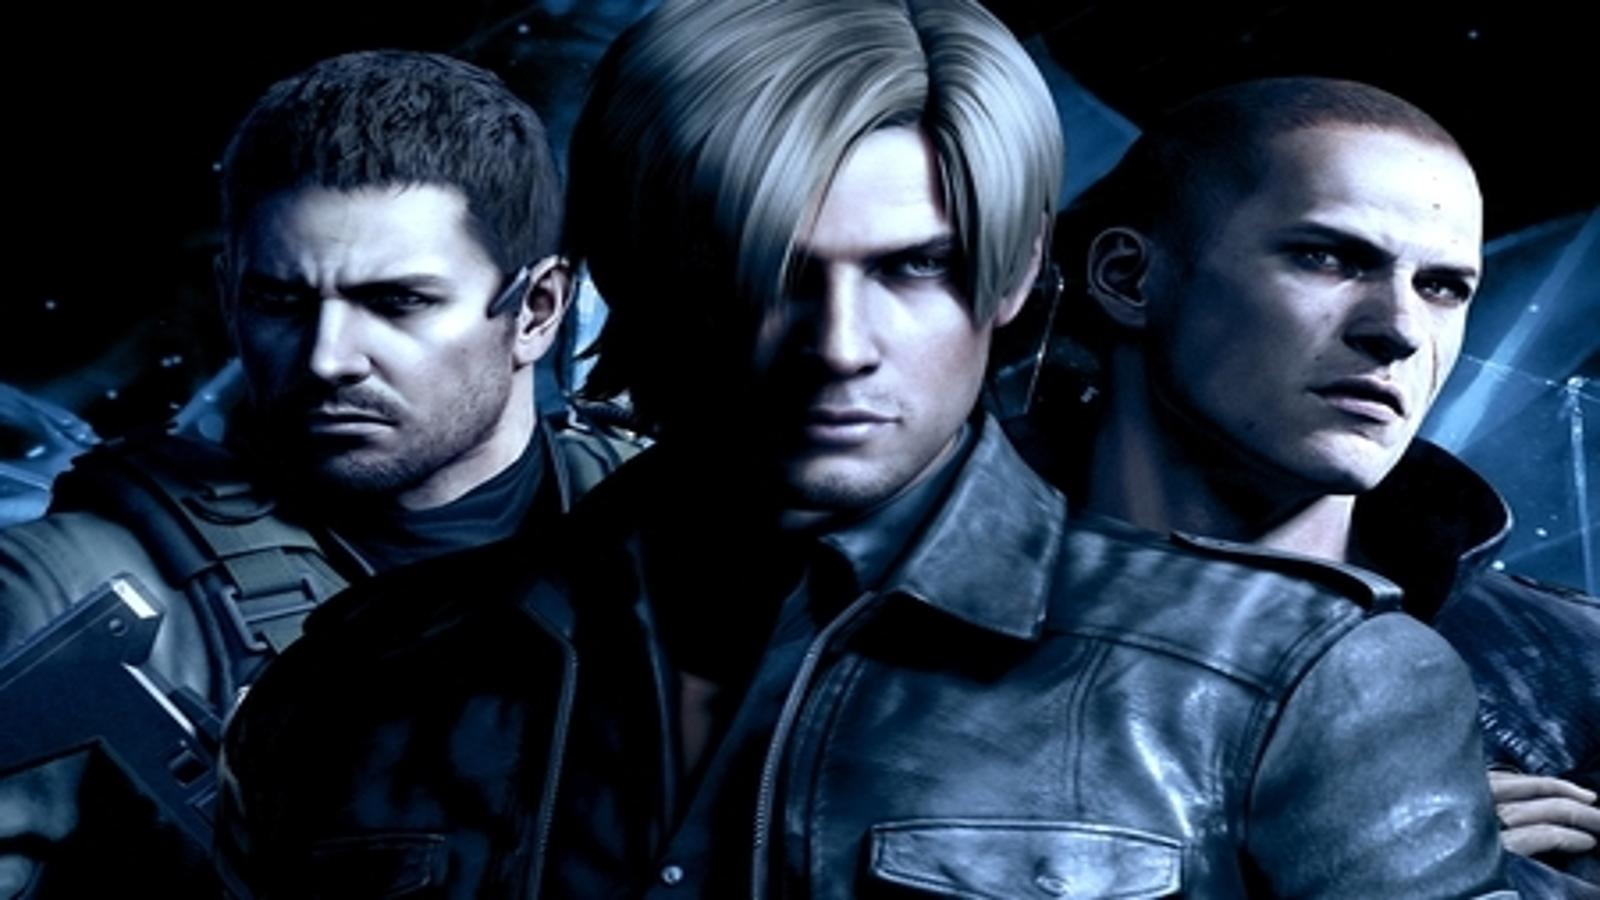 Resident Evil 5 - game screenshots at Riot Pixels, images